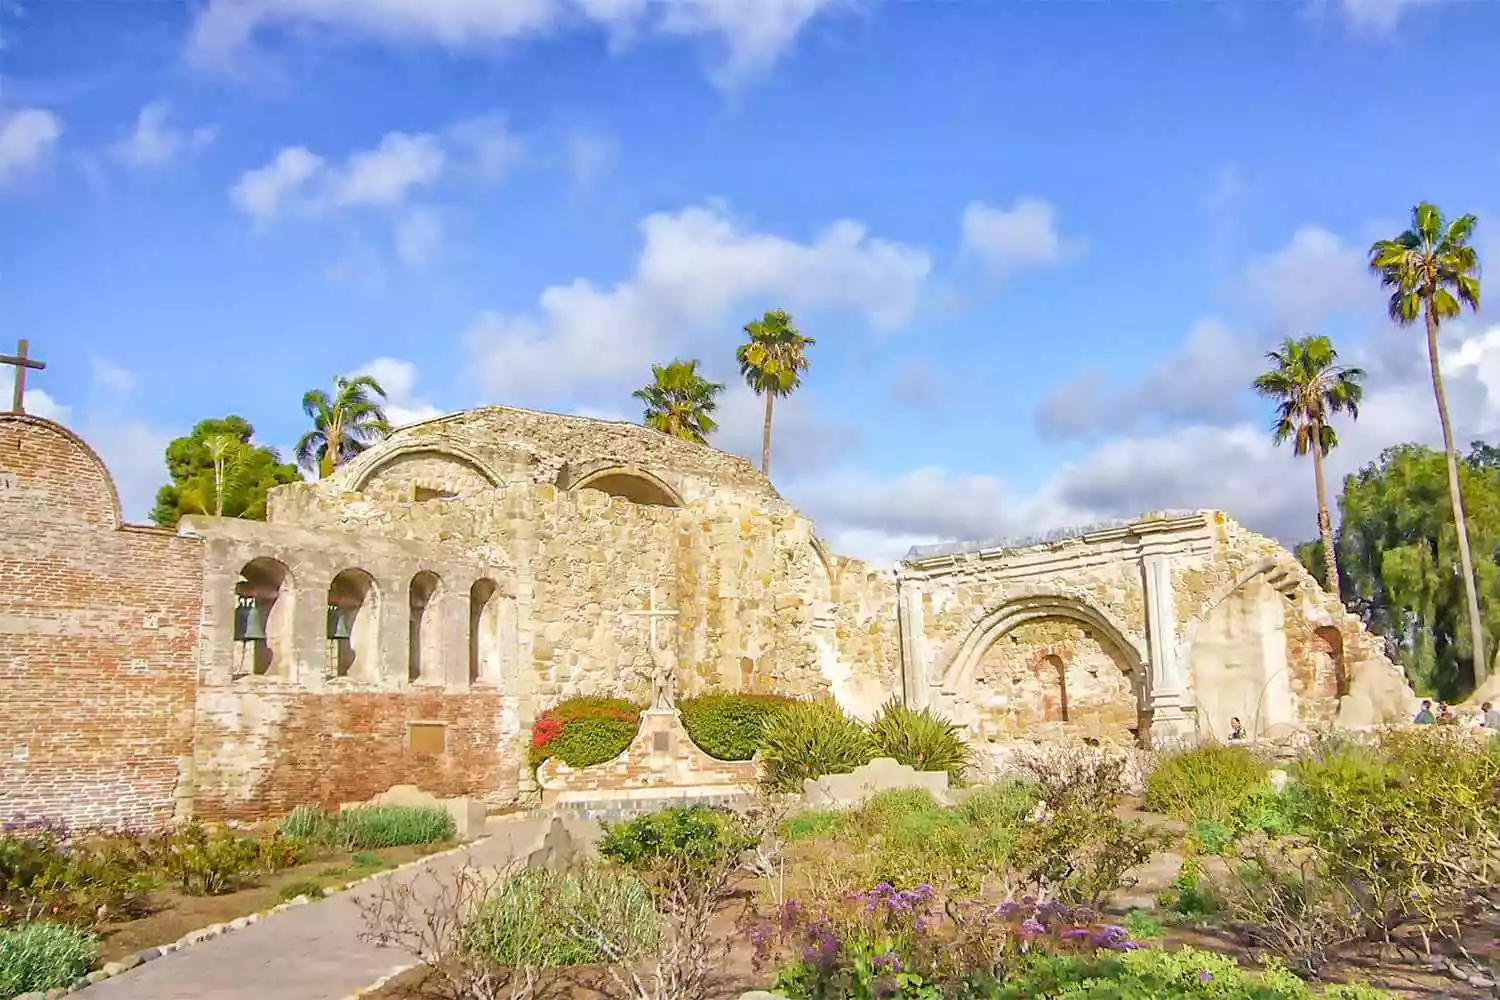 Historical Landmarks of San Juan Capistrano